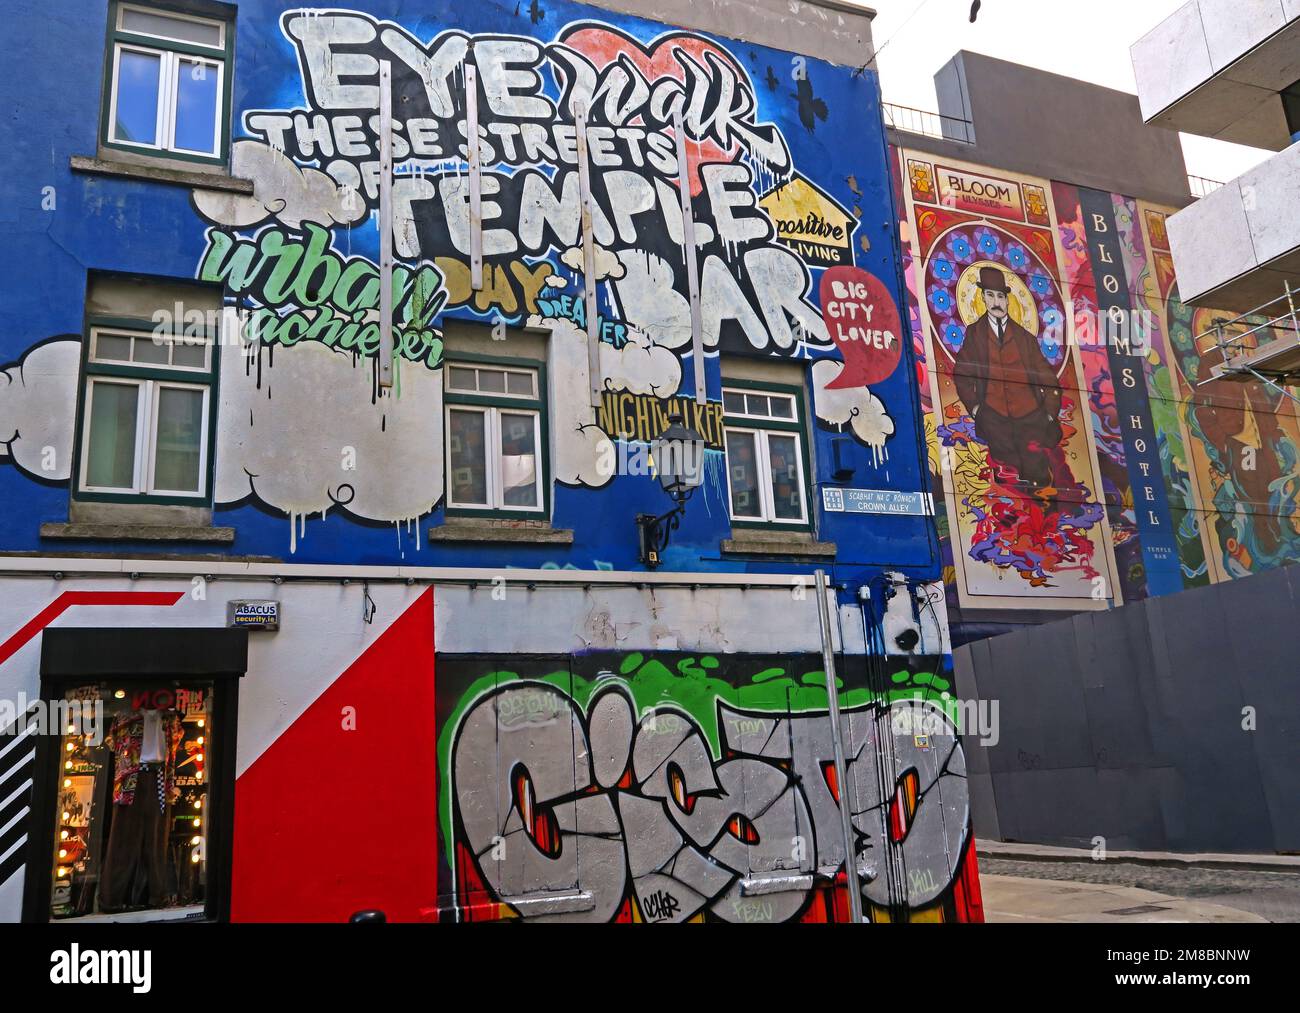 Crown Alley Temple Bar, Dublin, Eire, Ireland, graffiti, Eye Walk These Streets, Big City Lover Stock Photo